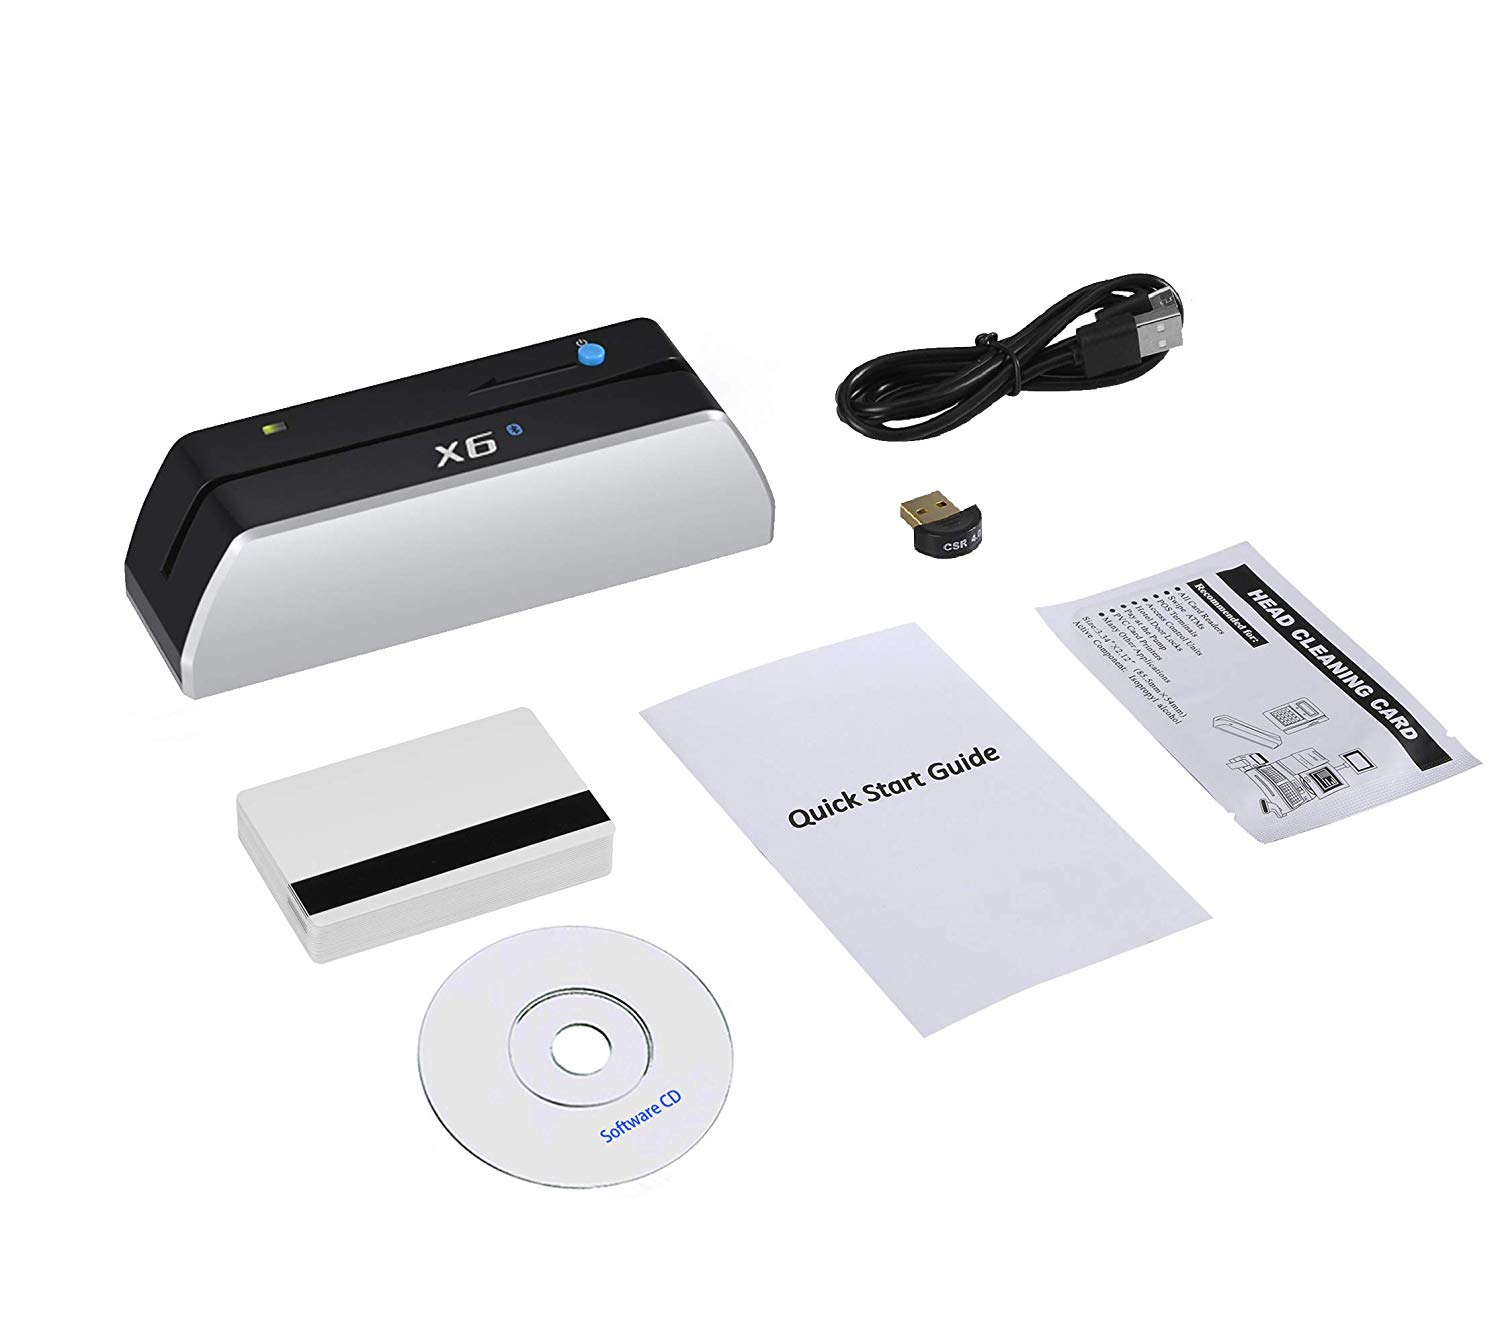 Bluetooth X6BT USB Card Reader Writer Encoder Swipe by Card Writer Device